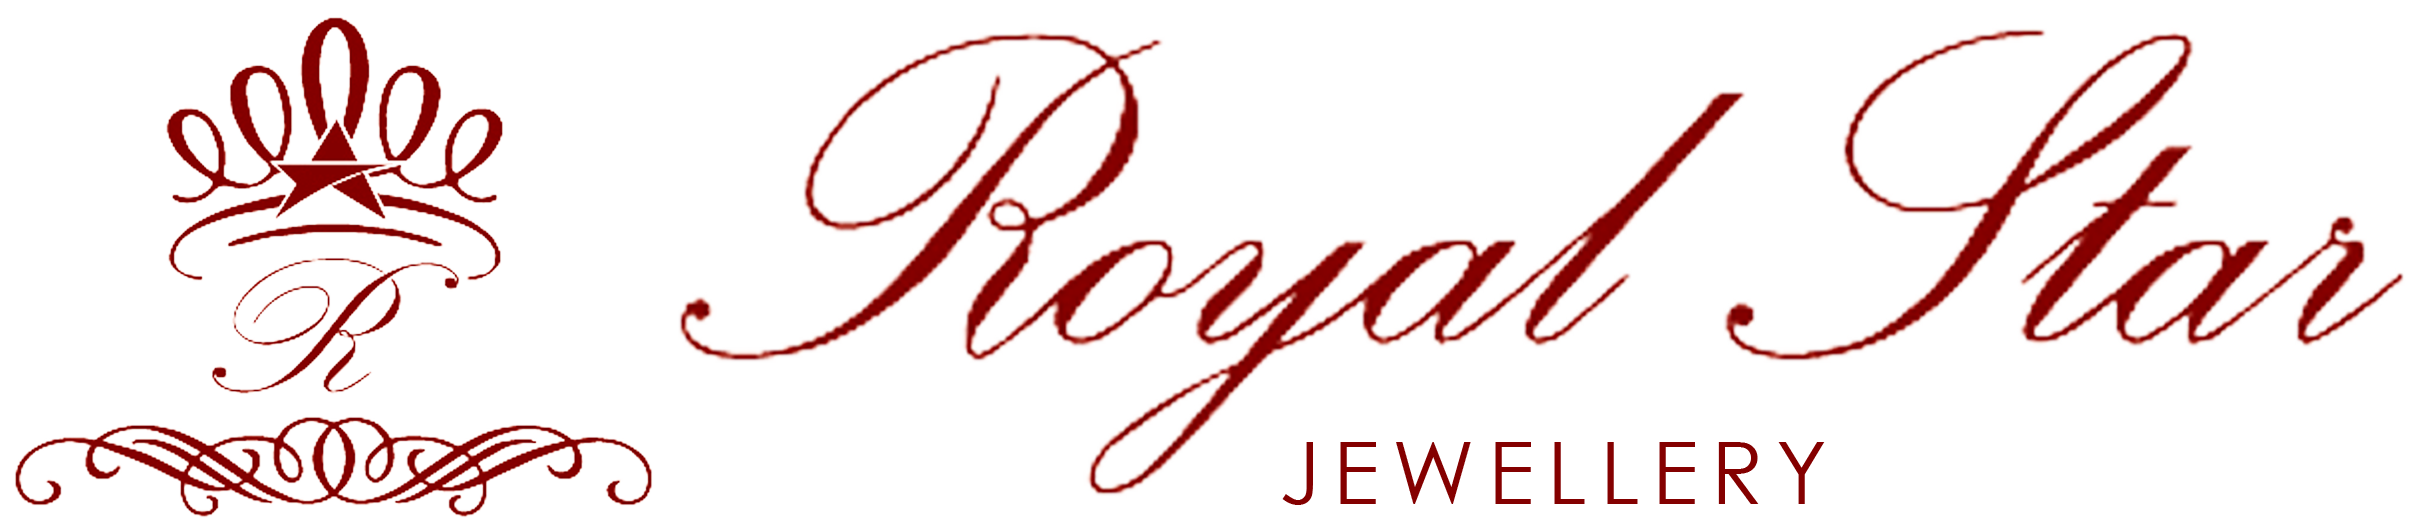 Royal Star Jewellery - Jewellery (2417x523)